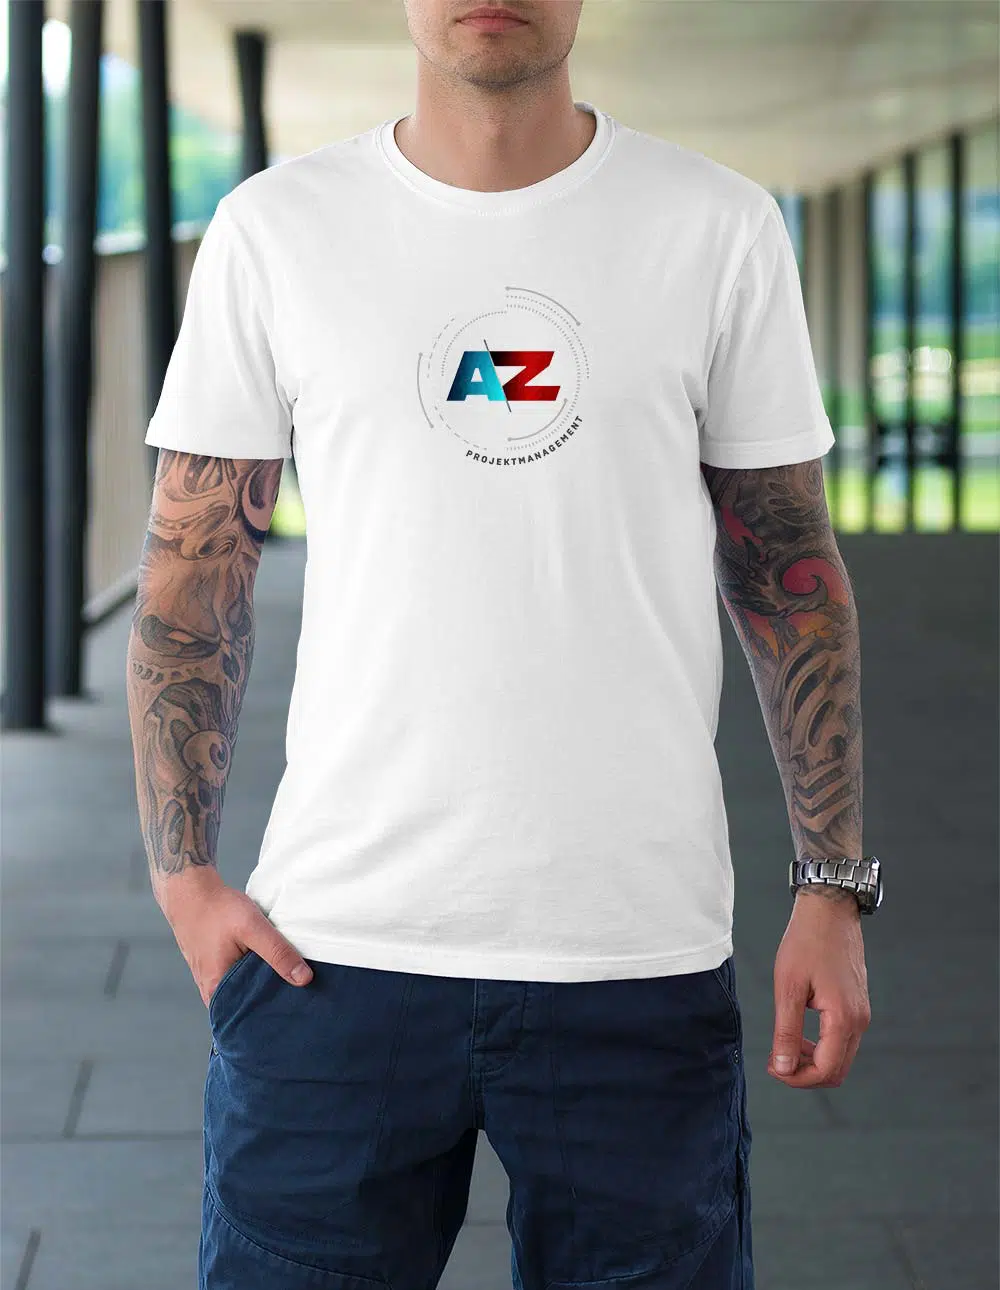 AZ-PM-Logo-Shirt